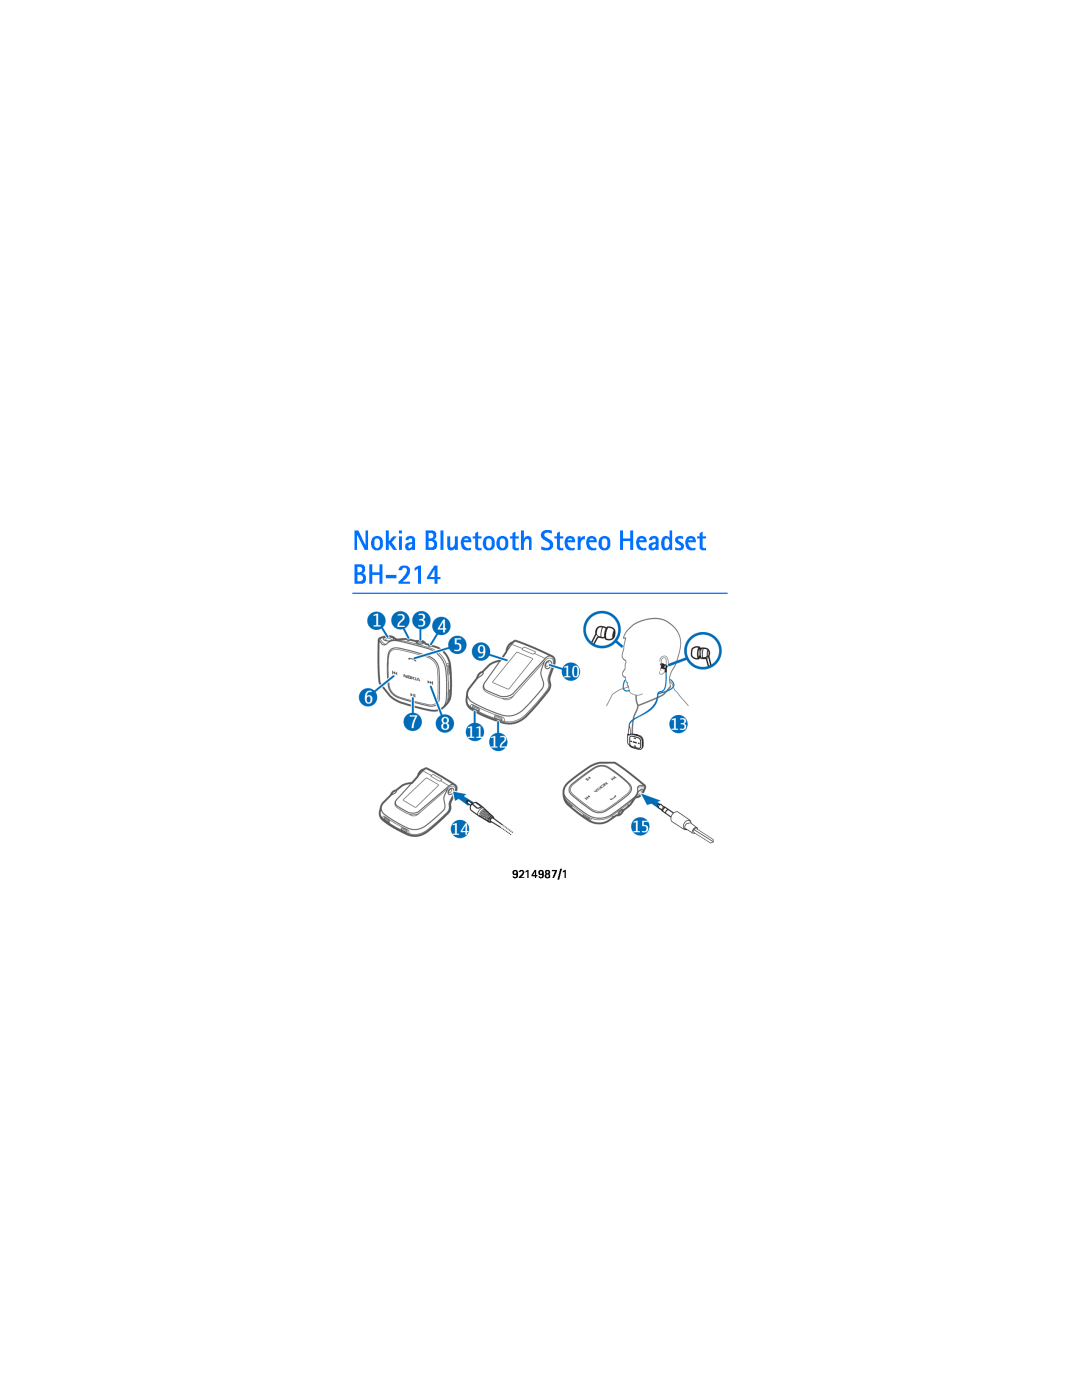 Nokia manual Nokia Bluetooth Stereo Headset BH-214, 9214987/1 